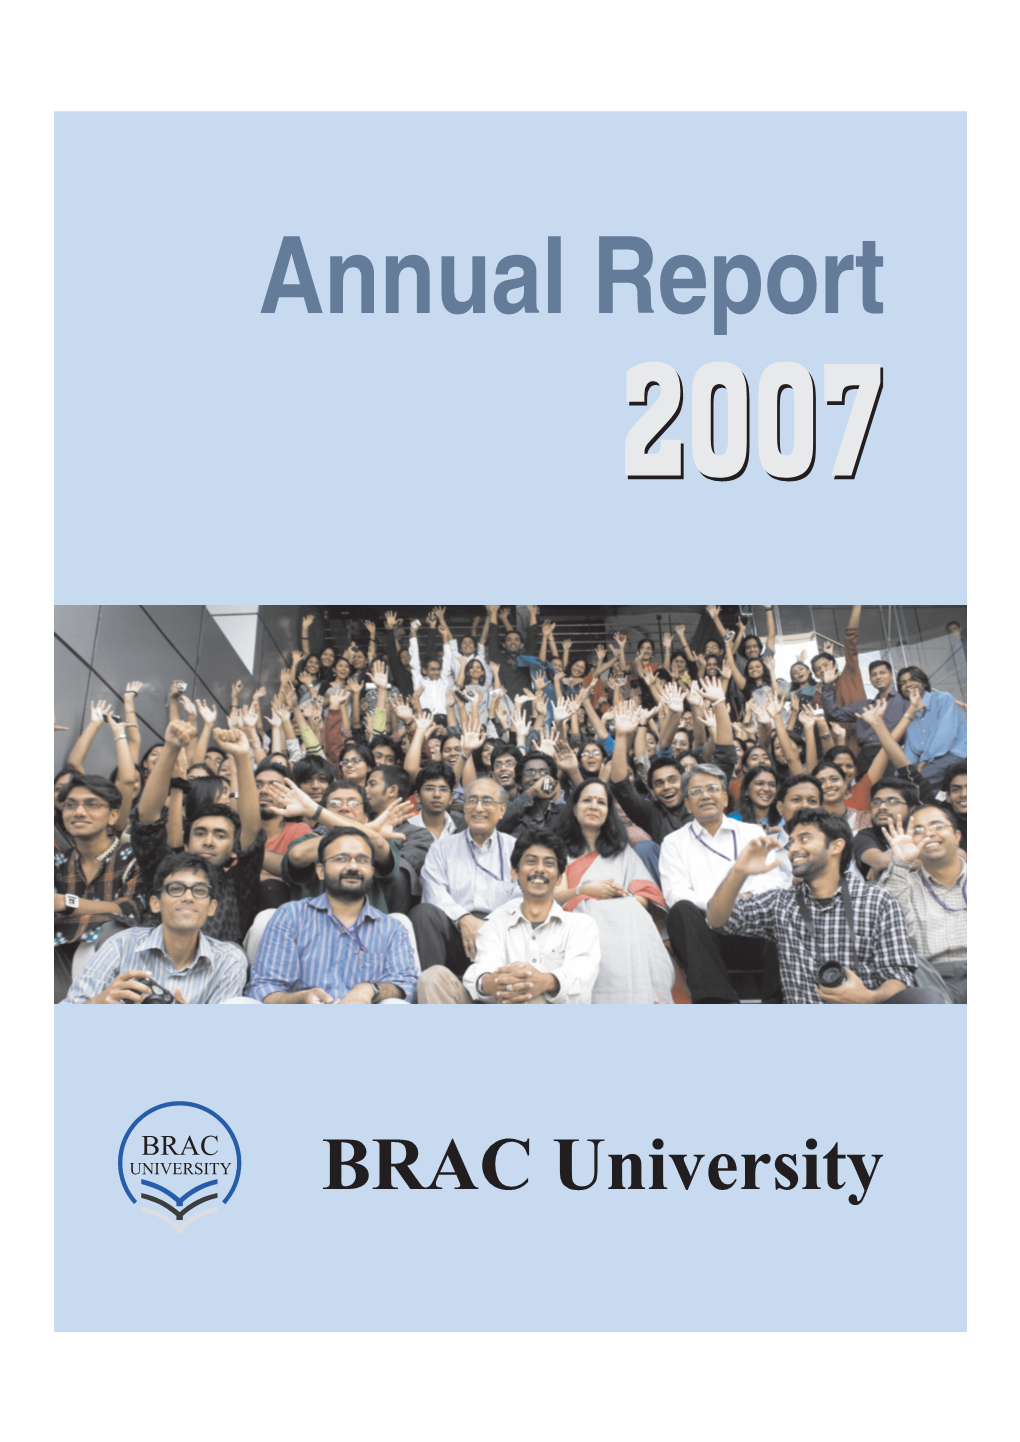 Annual Report 20072007